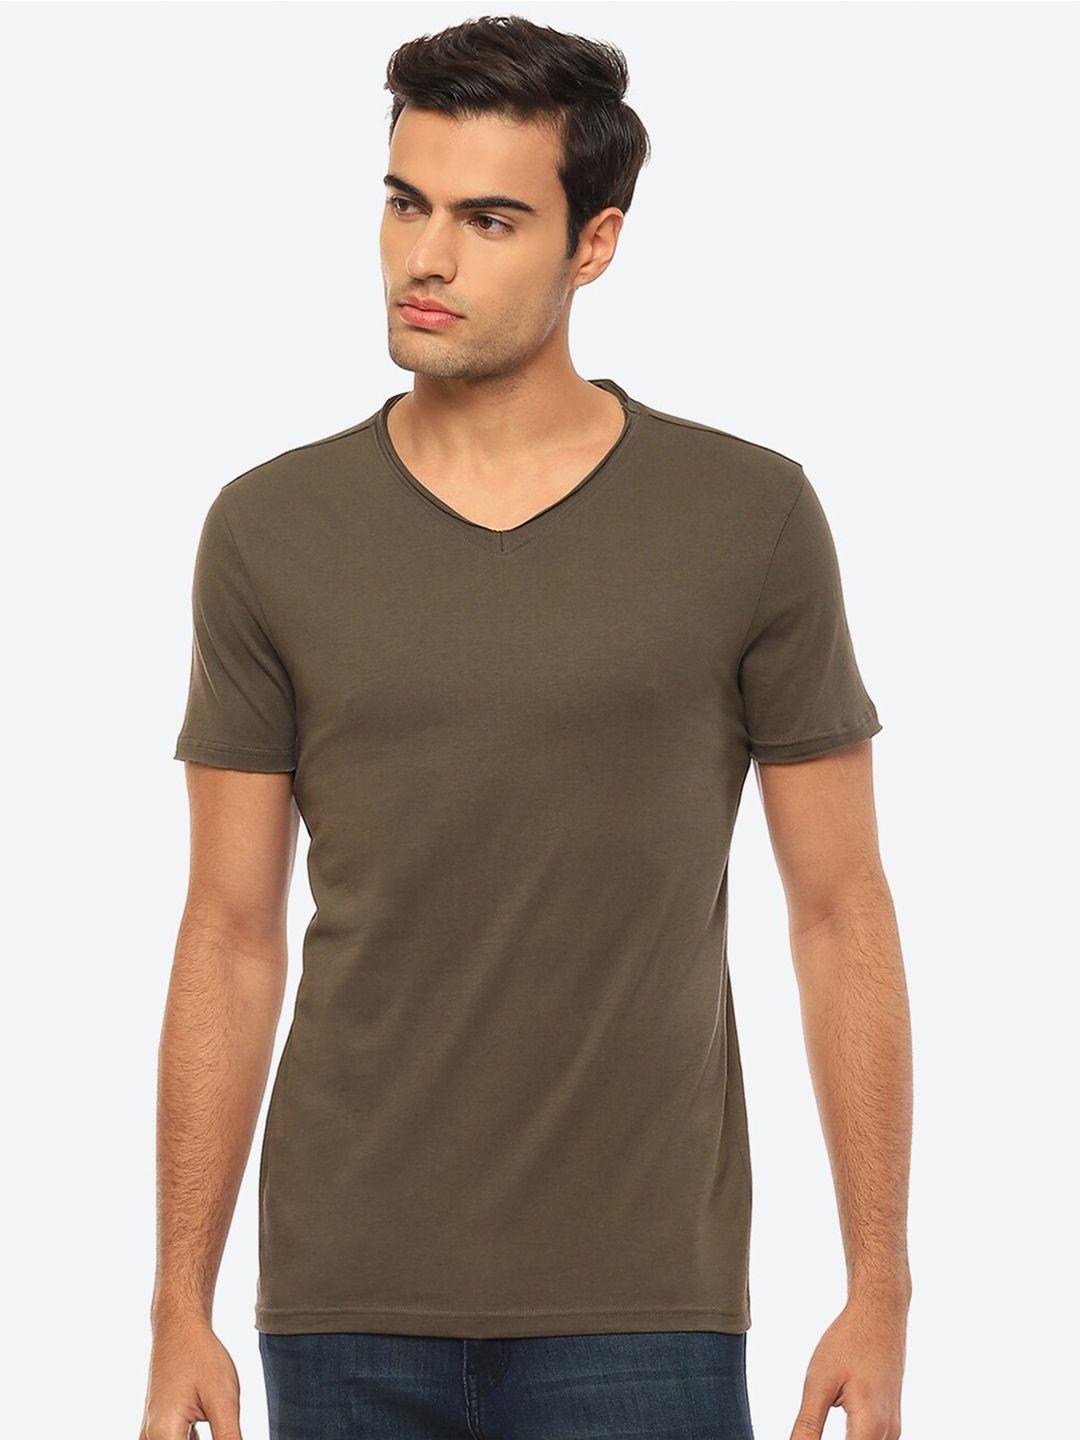 2bme v-neck short sleeves pure cotton t-shirt